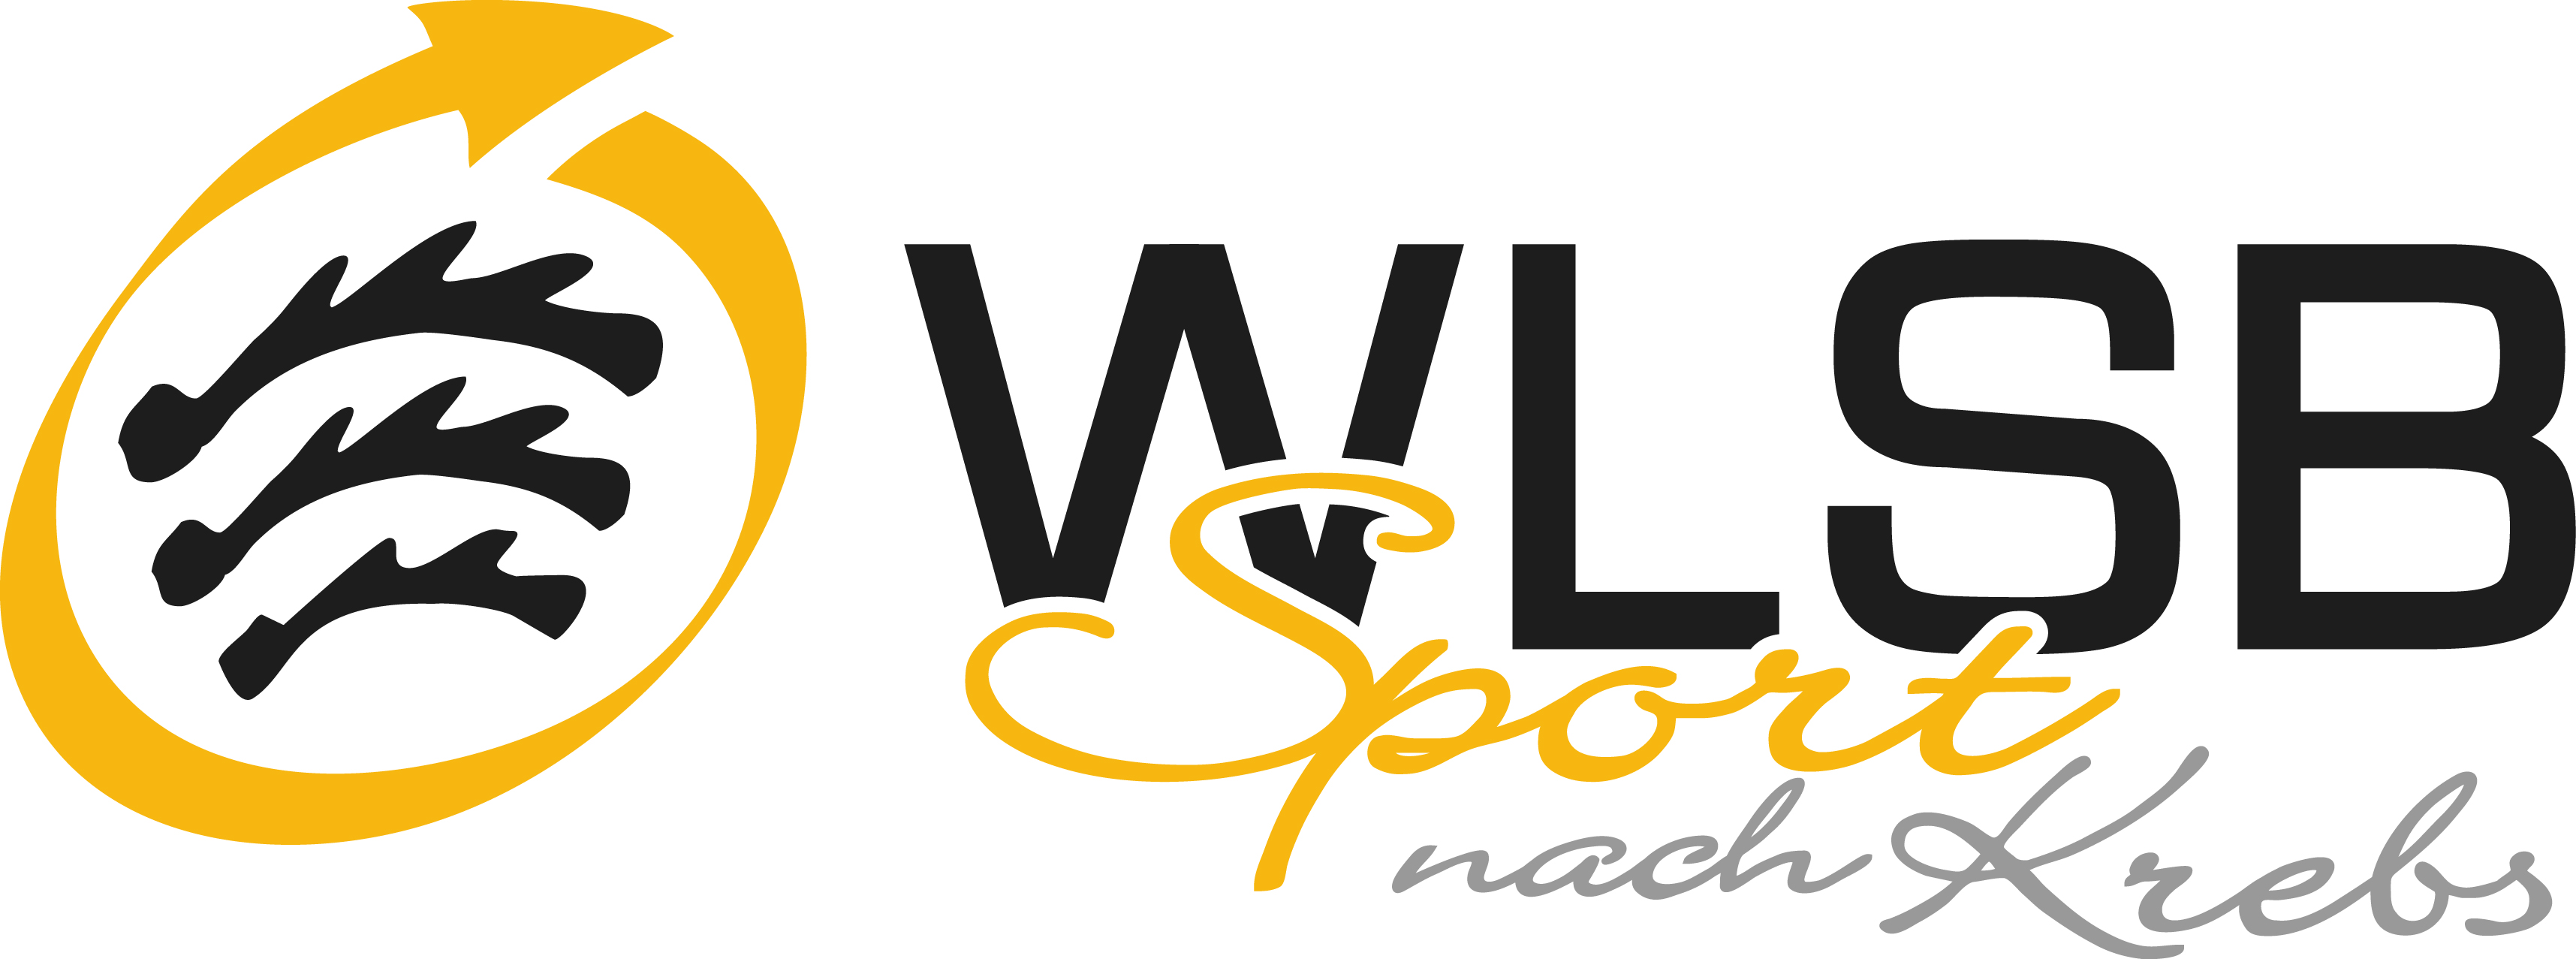 logo-sport-nach-krebs.jpg